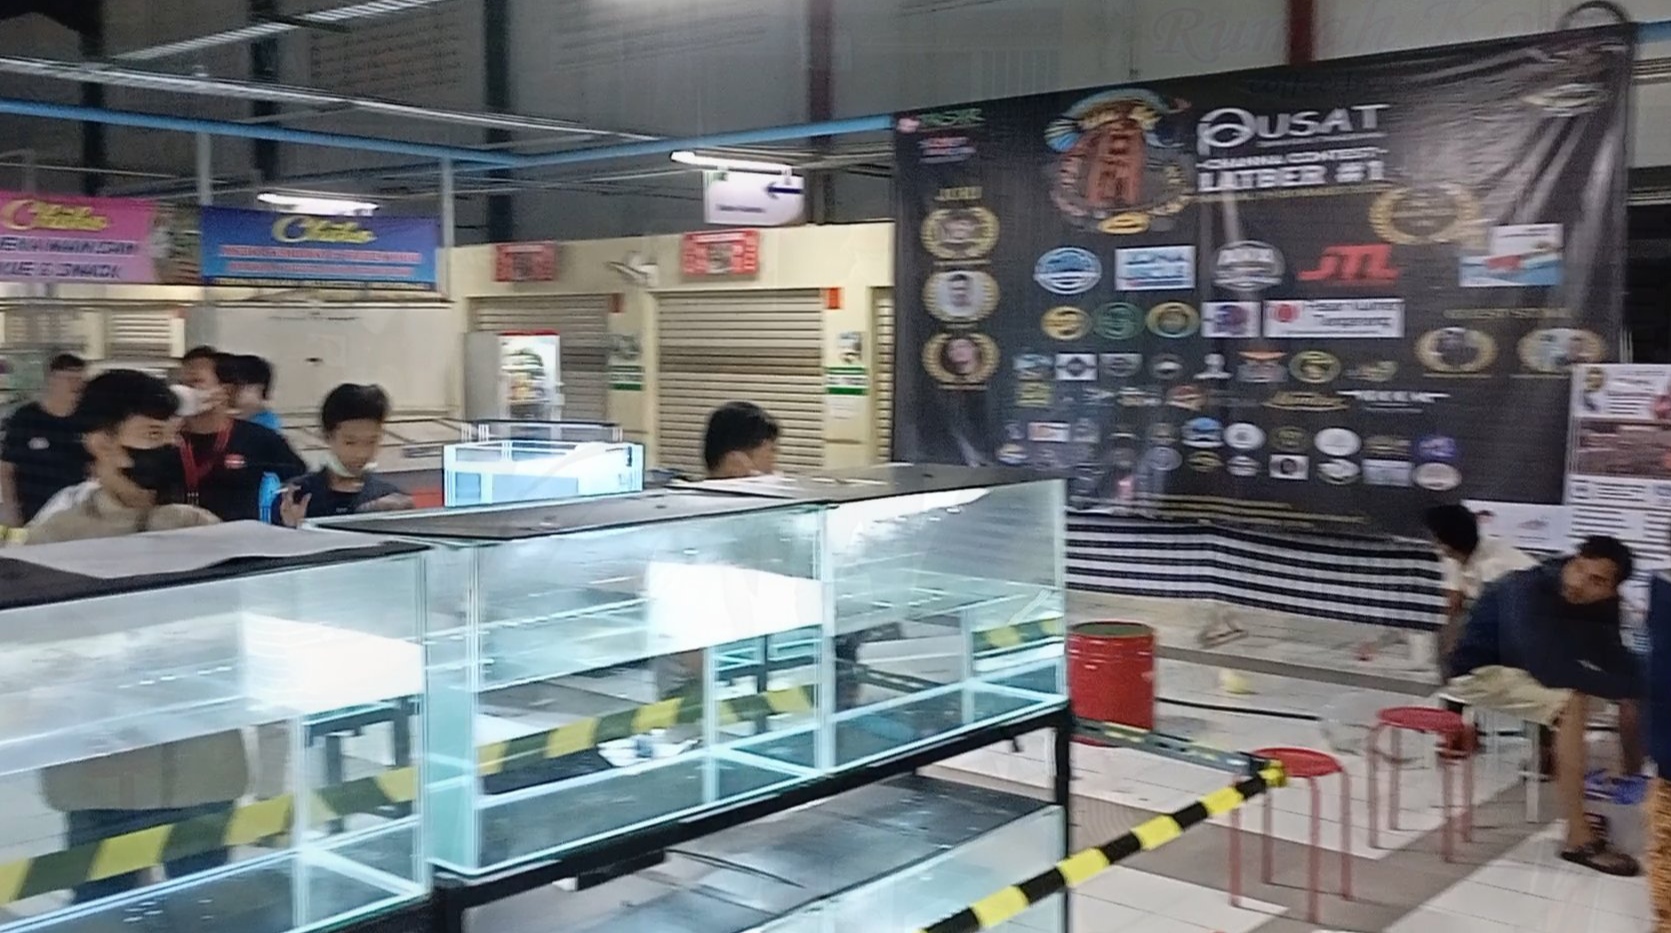 Pencinta Ikan Channa Di Tangerang Antusias ikut Dalam Ajang Channa Contest Latber 1 Di pasar Ufit Goldland Karawaci